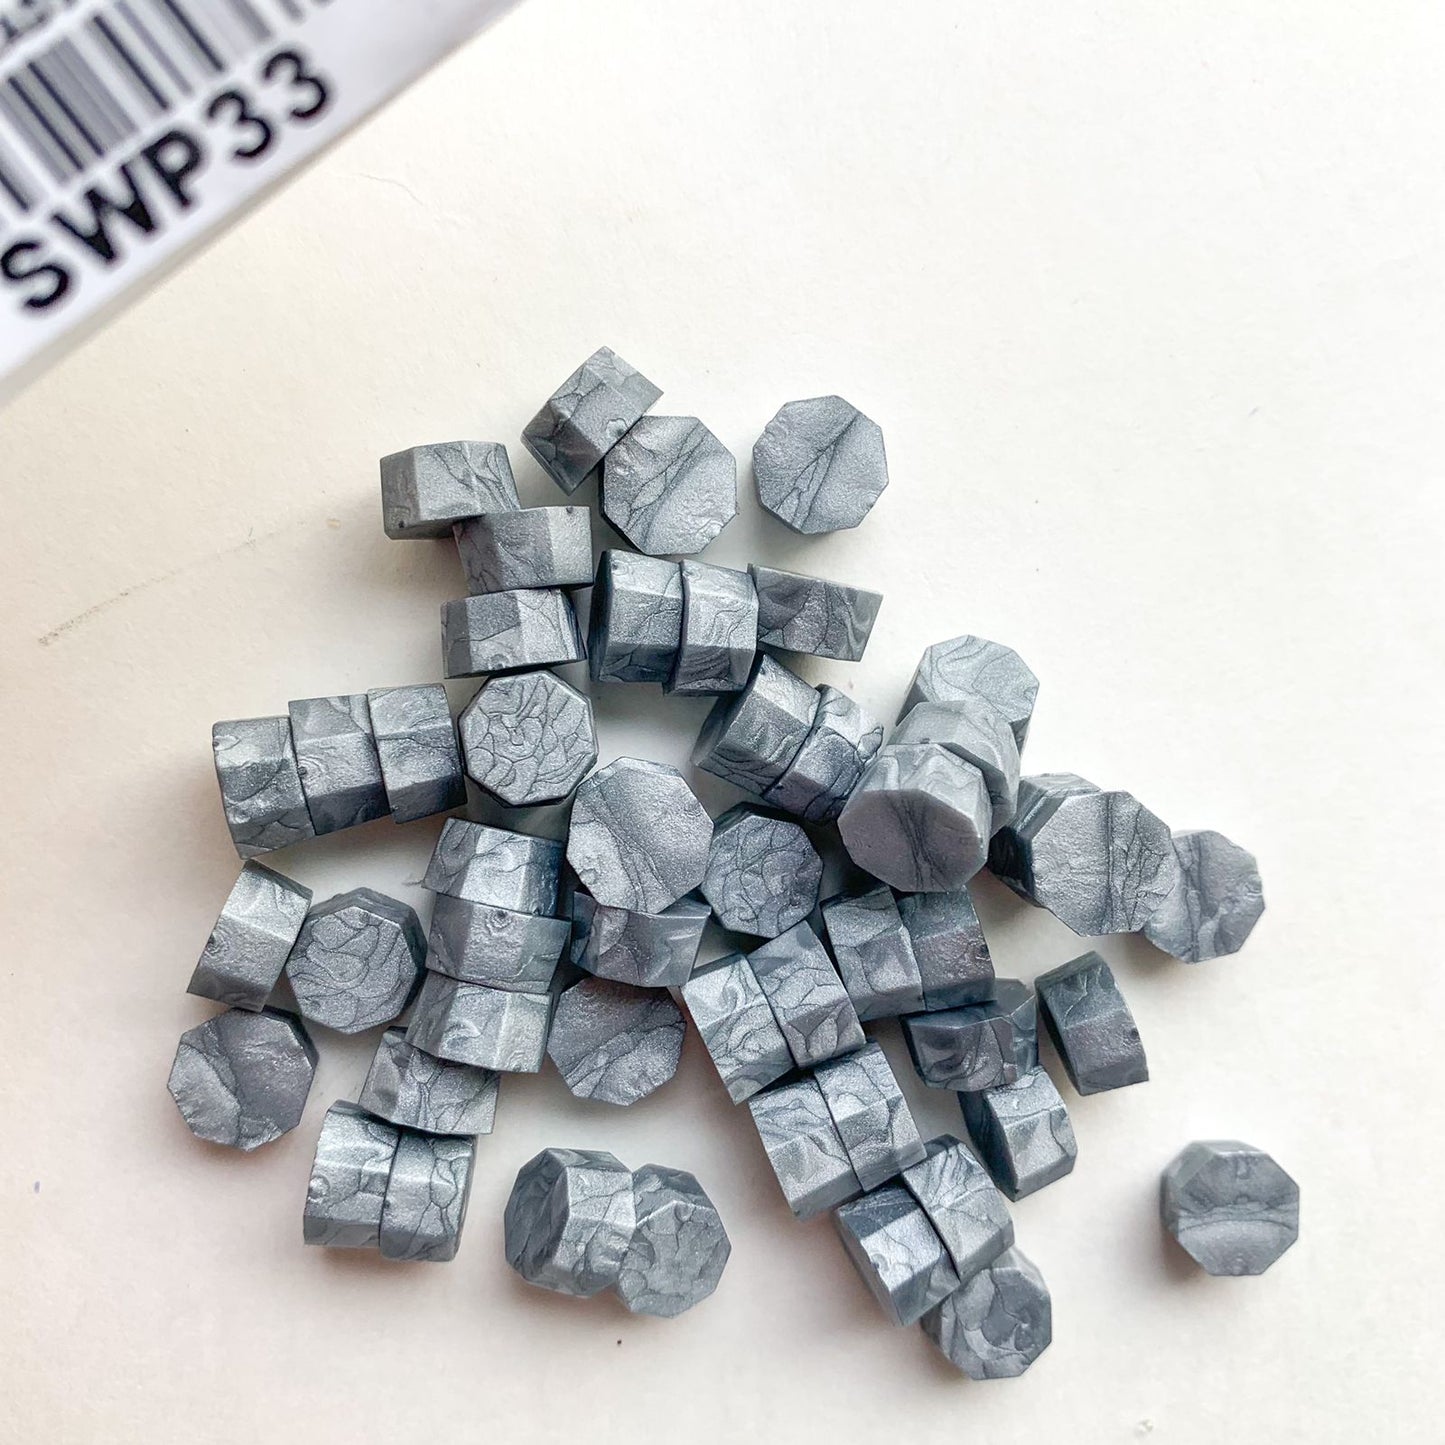 SWP33 - Wax Beads 1 Pckt = 50 Pcs